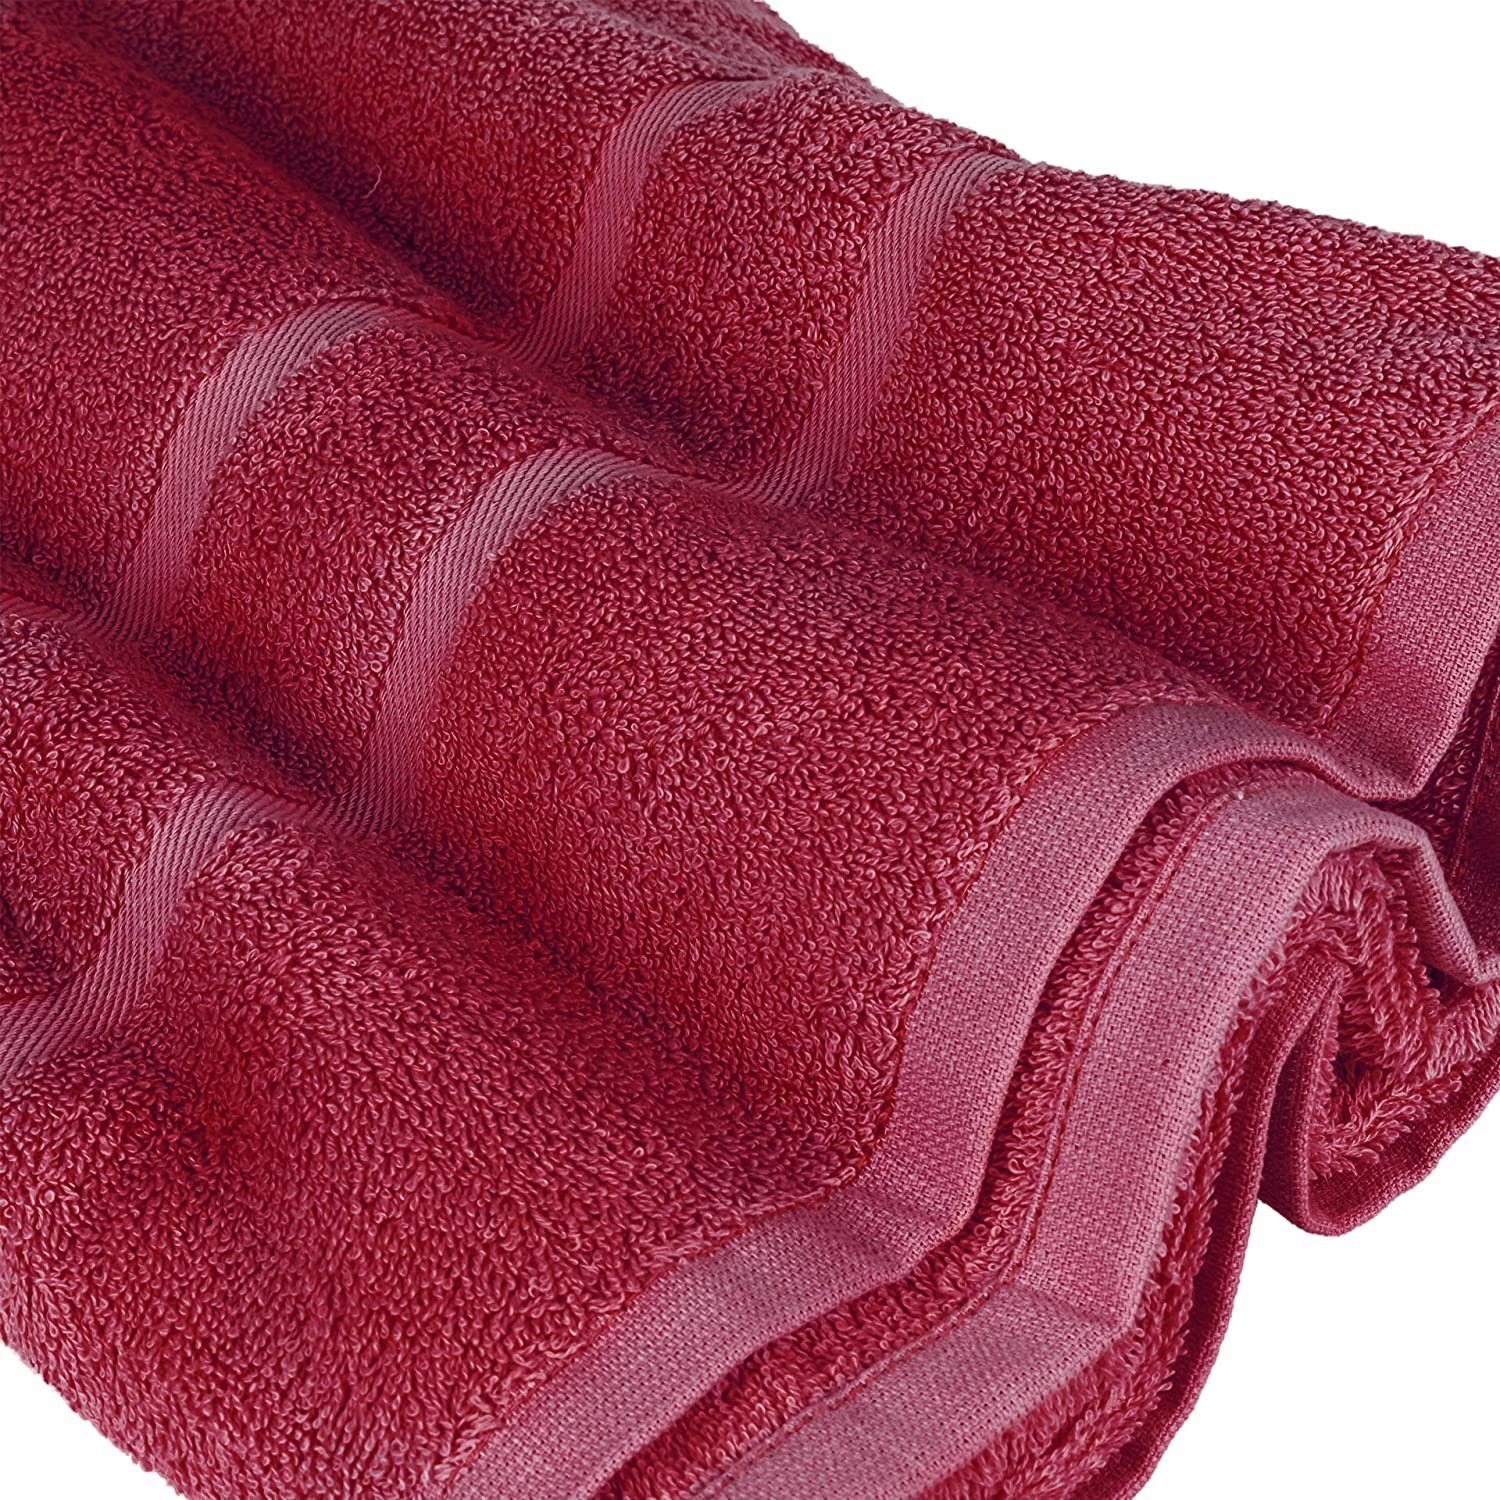 StickandShine Handtuch Set 4x GSM Handtuch 500 Duschtücher Gästehandtuch Farben als Frottee Handtücher 100% (14 6x 4x GSM Baumwolle 500 Teilig) Baumwolle 100% SET in 14er verschiedenen Bordeaux Pack